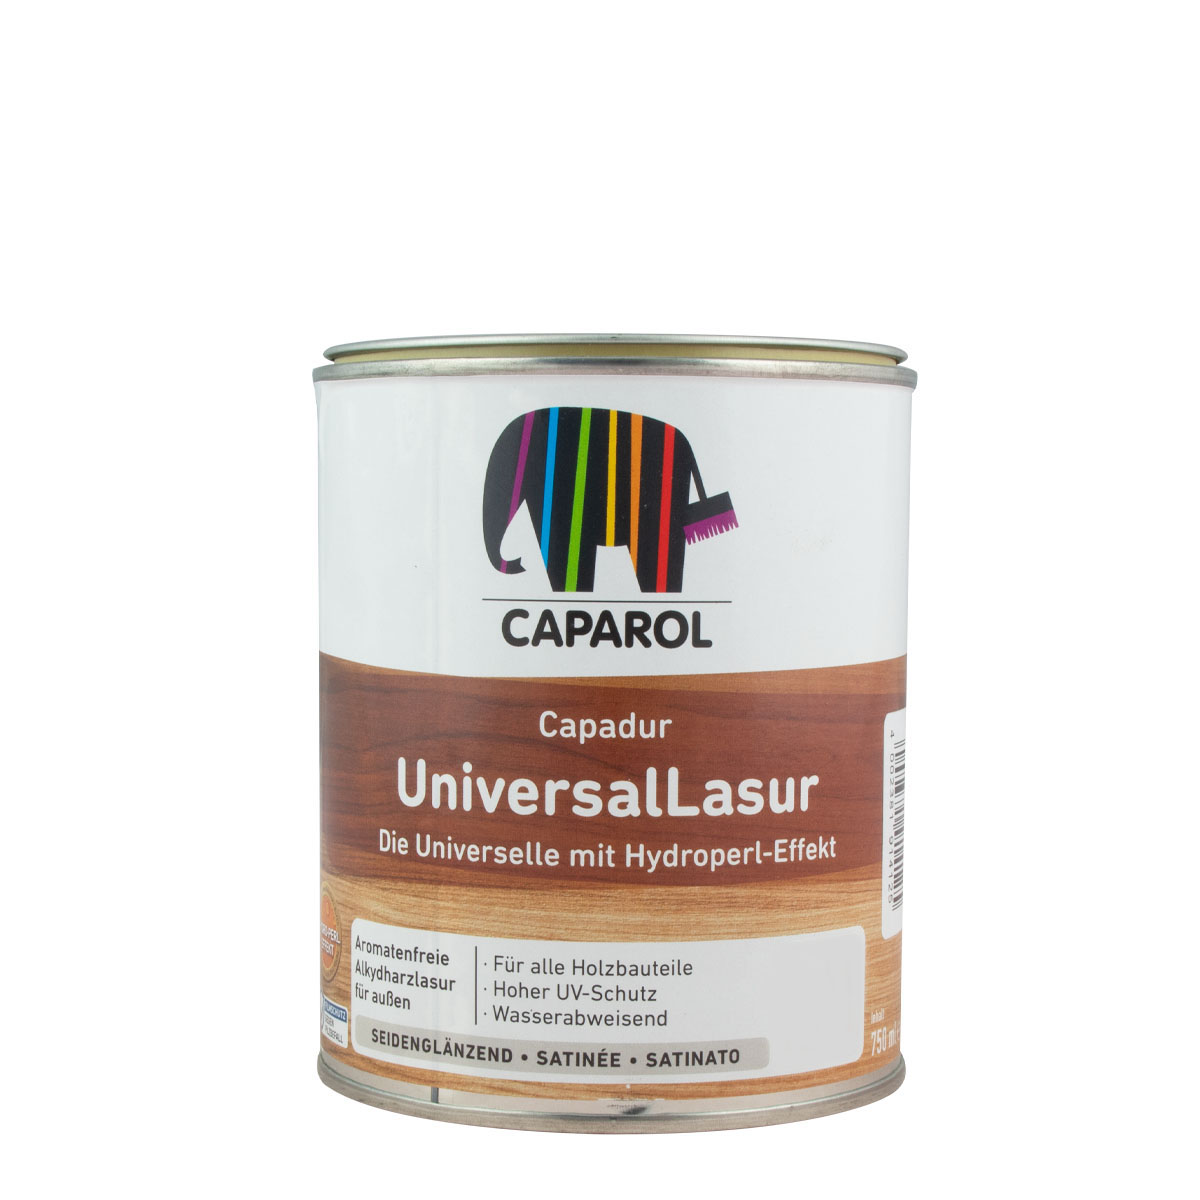 Caparol Capadur Universal Lasur 750ml, Farblos